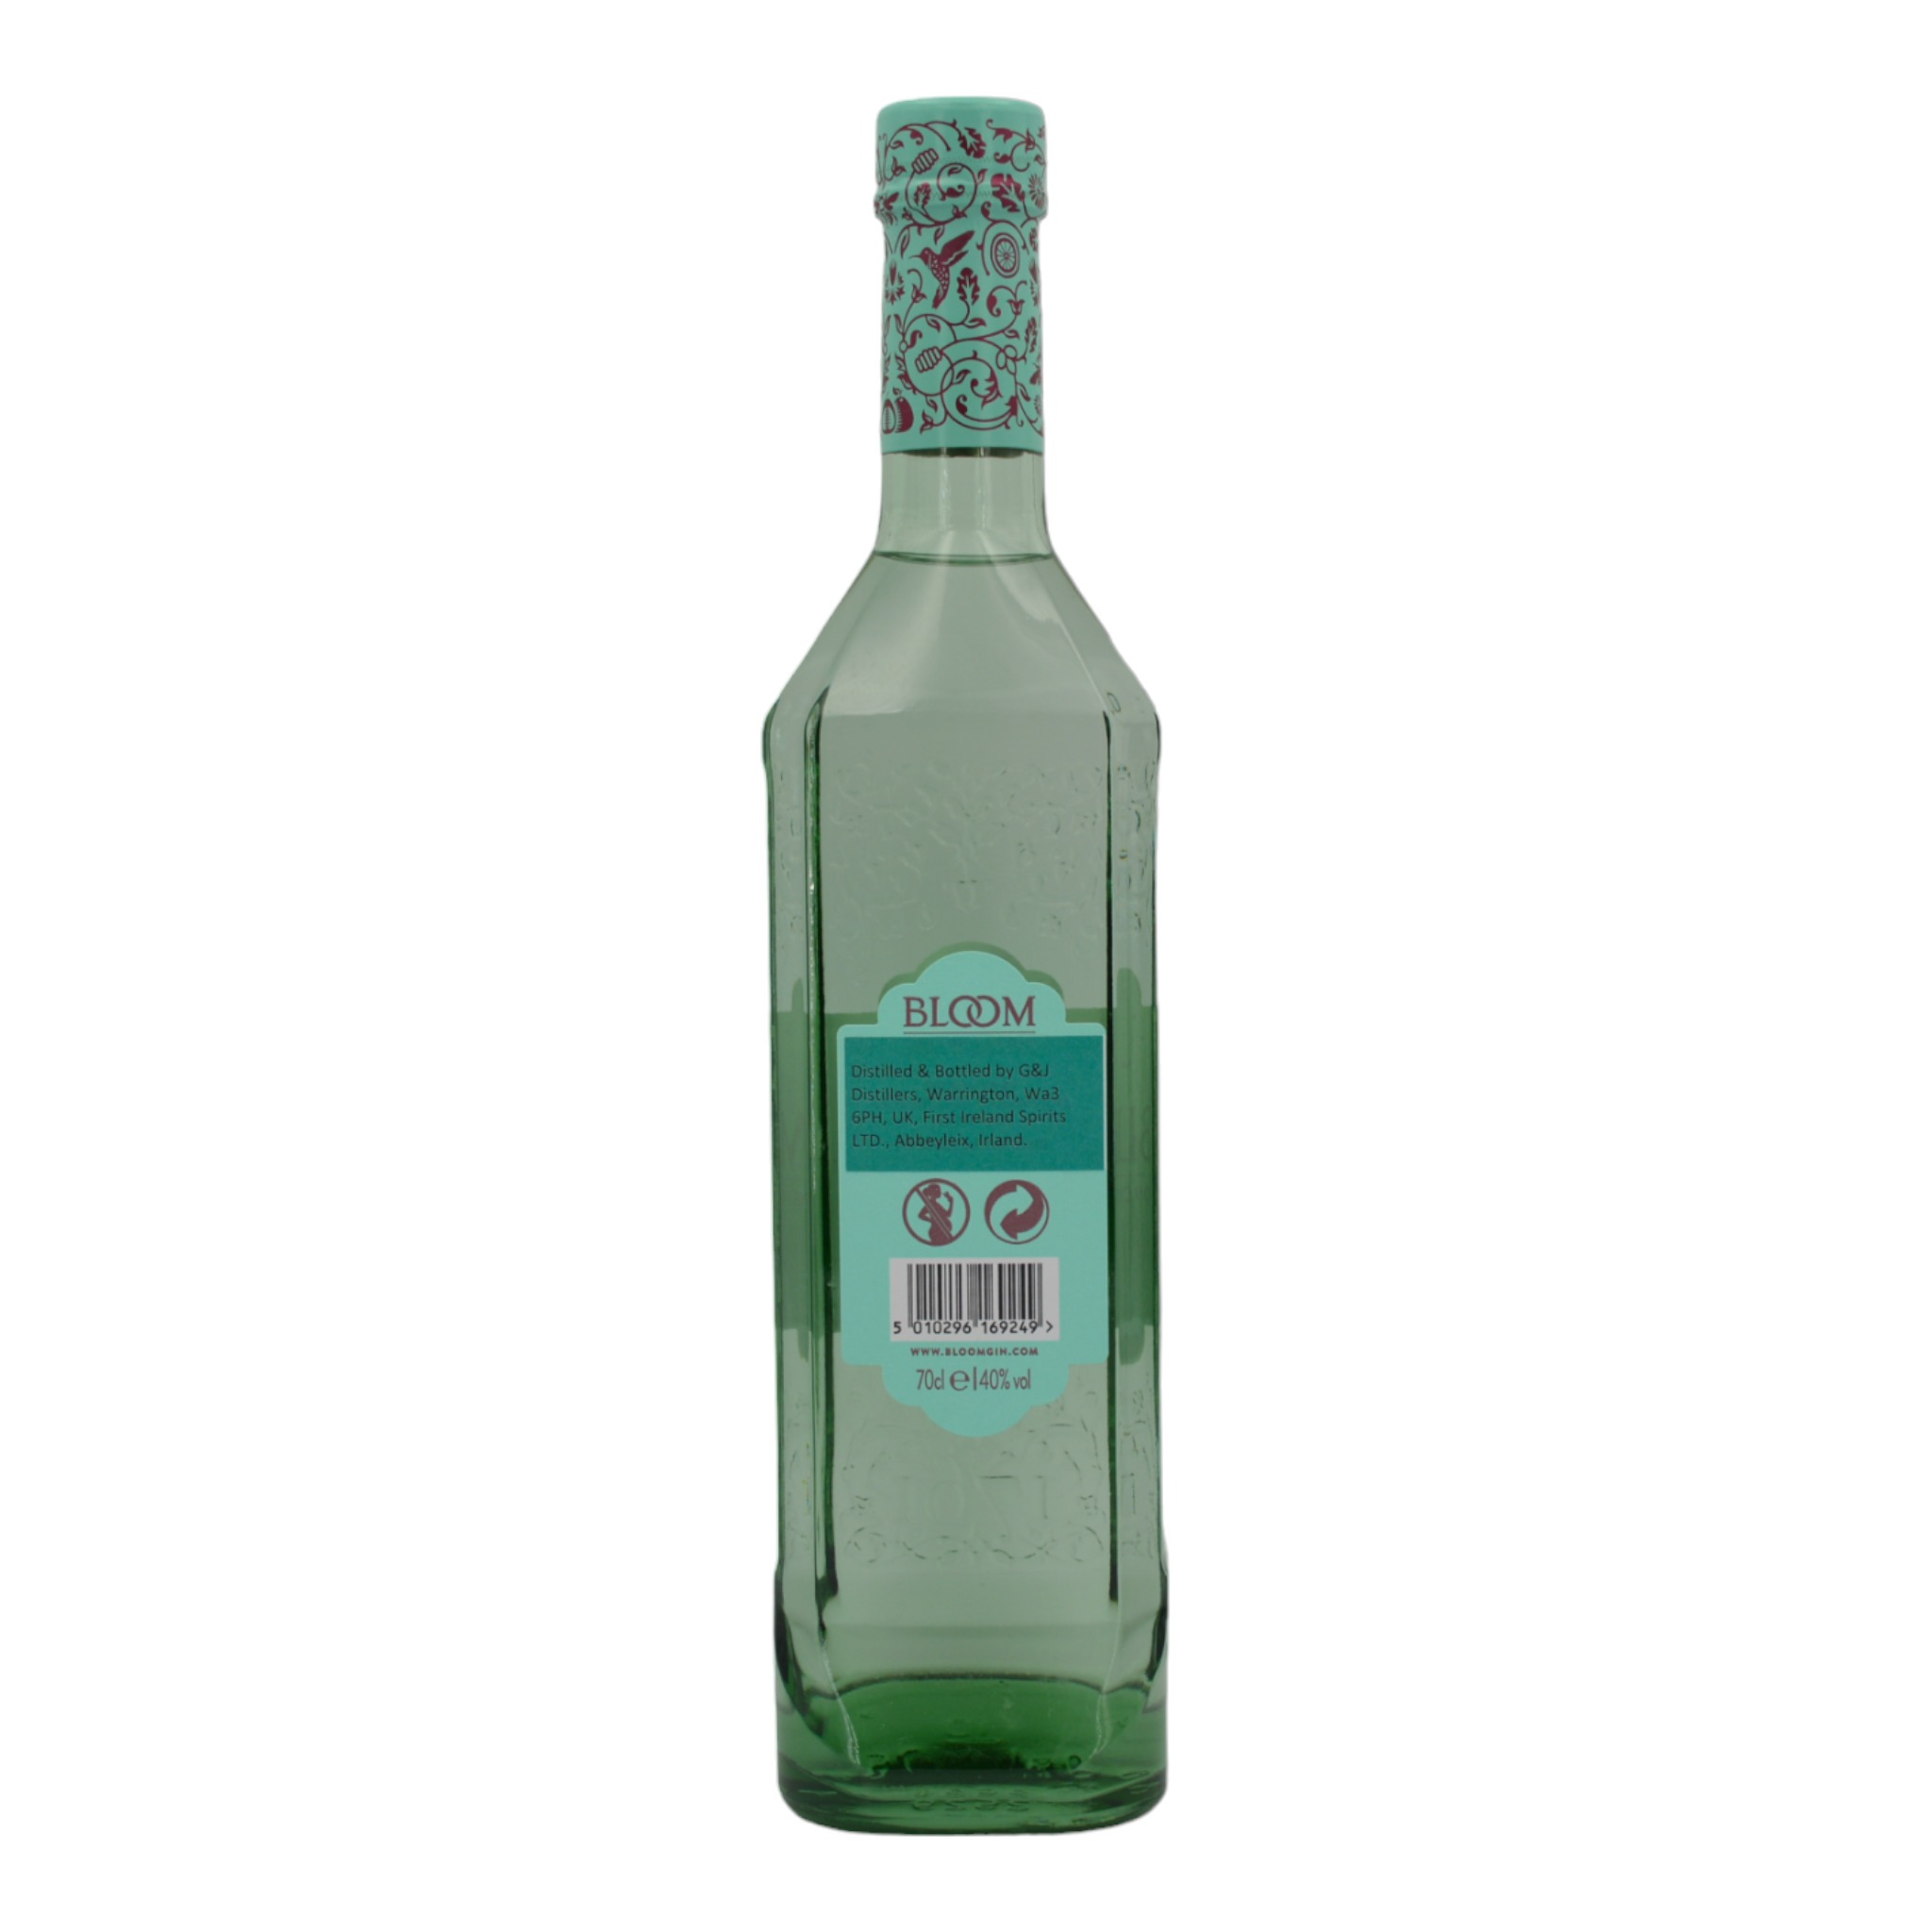 5010296169249Bloom London Dry Gin b - Weinhaus-Buecker